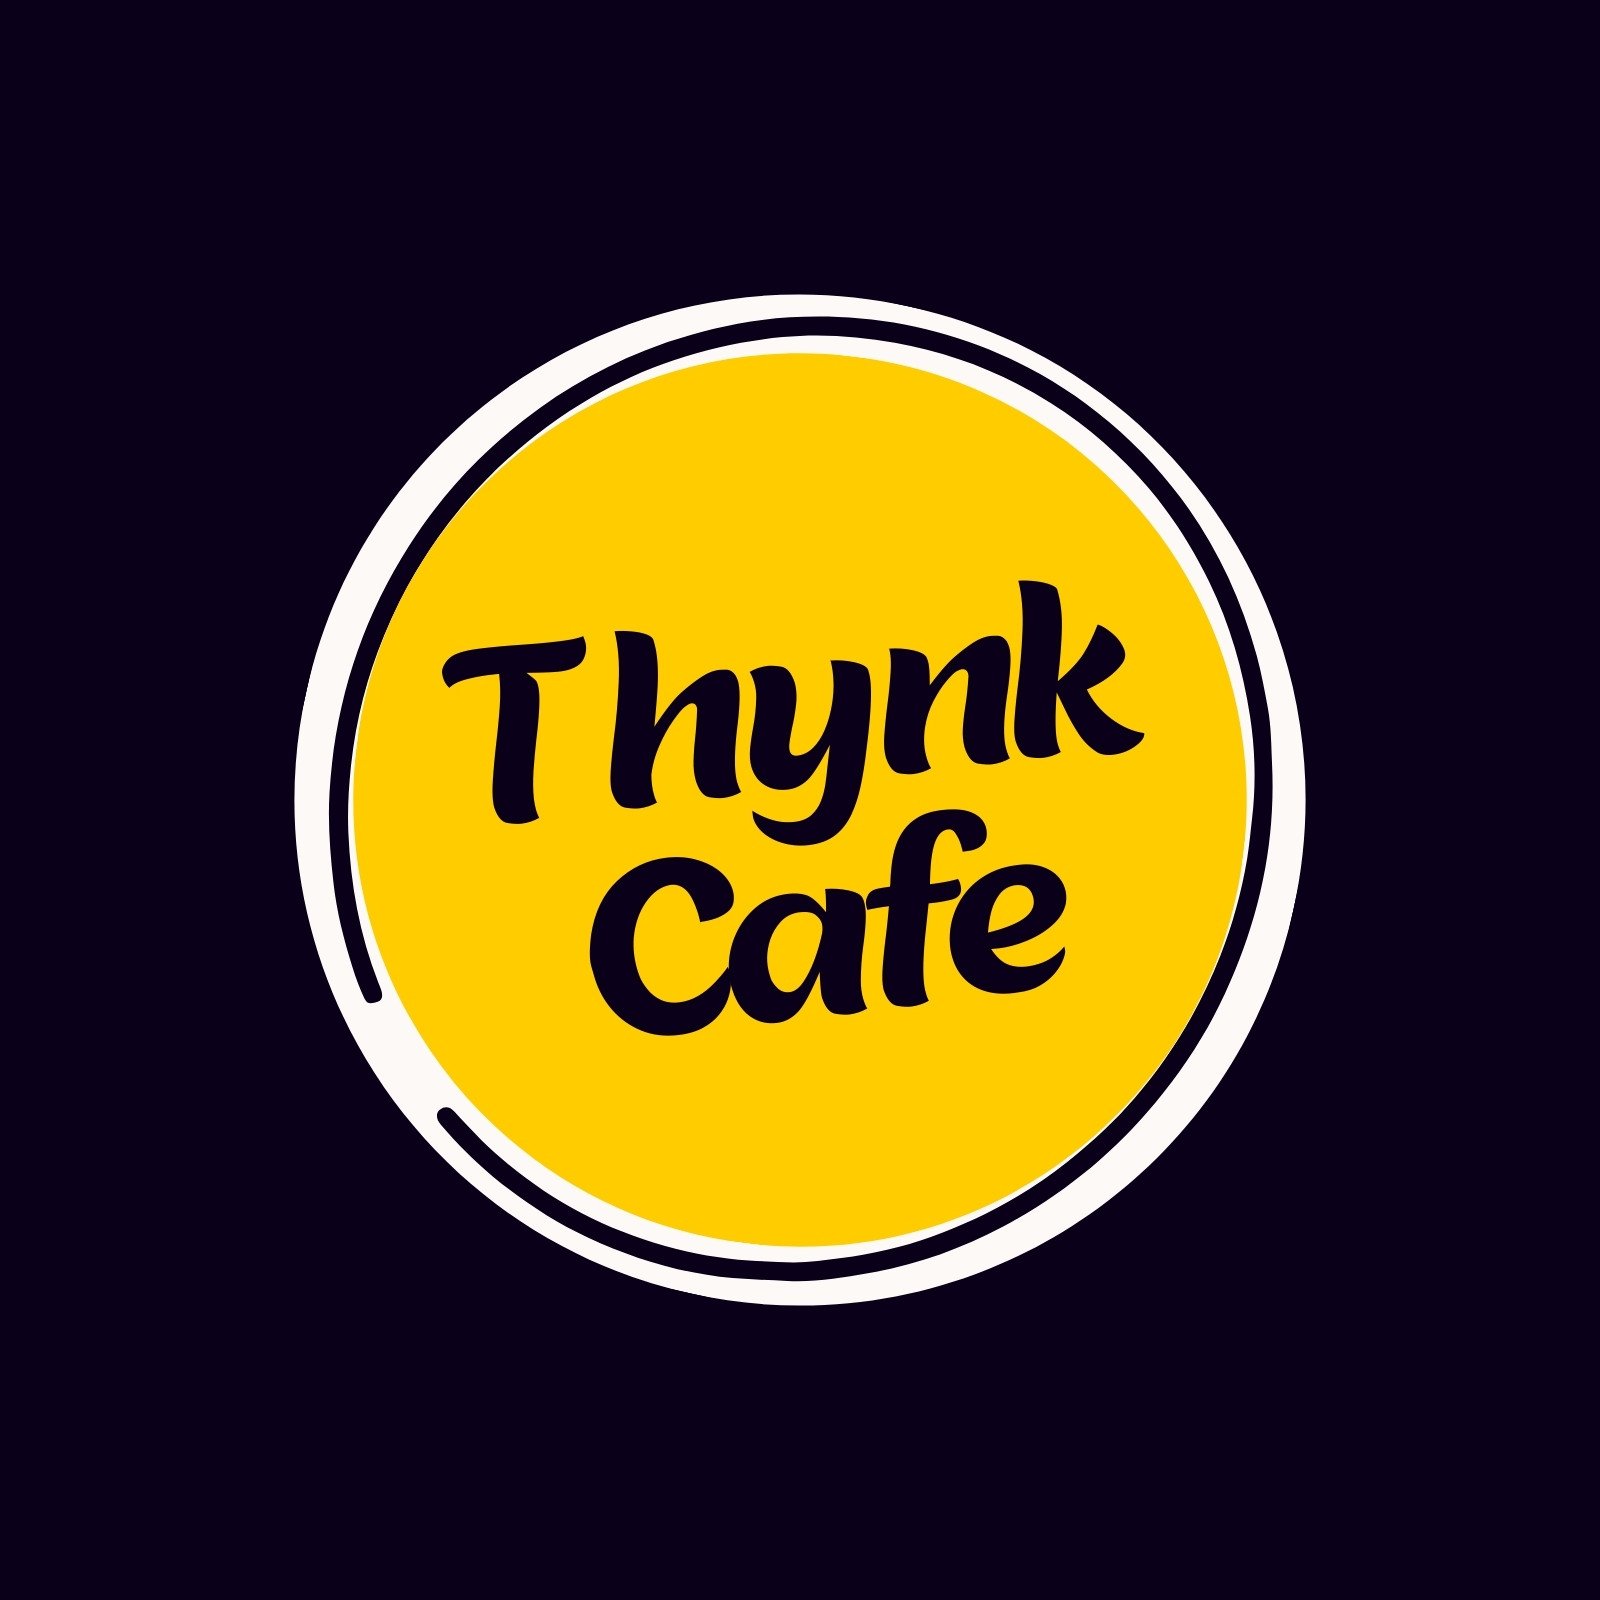 Free printable and customizable cafe logo templates, café - okgo.net